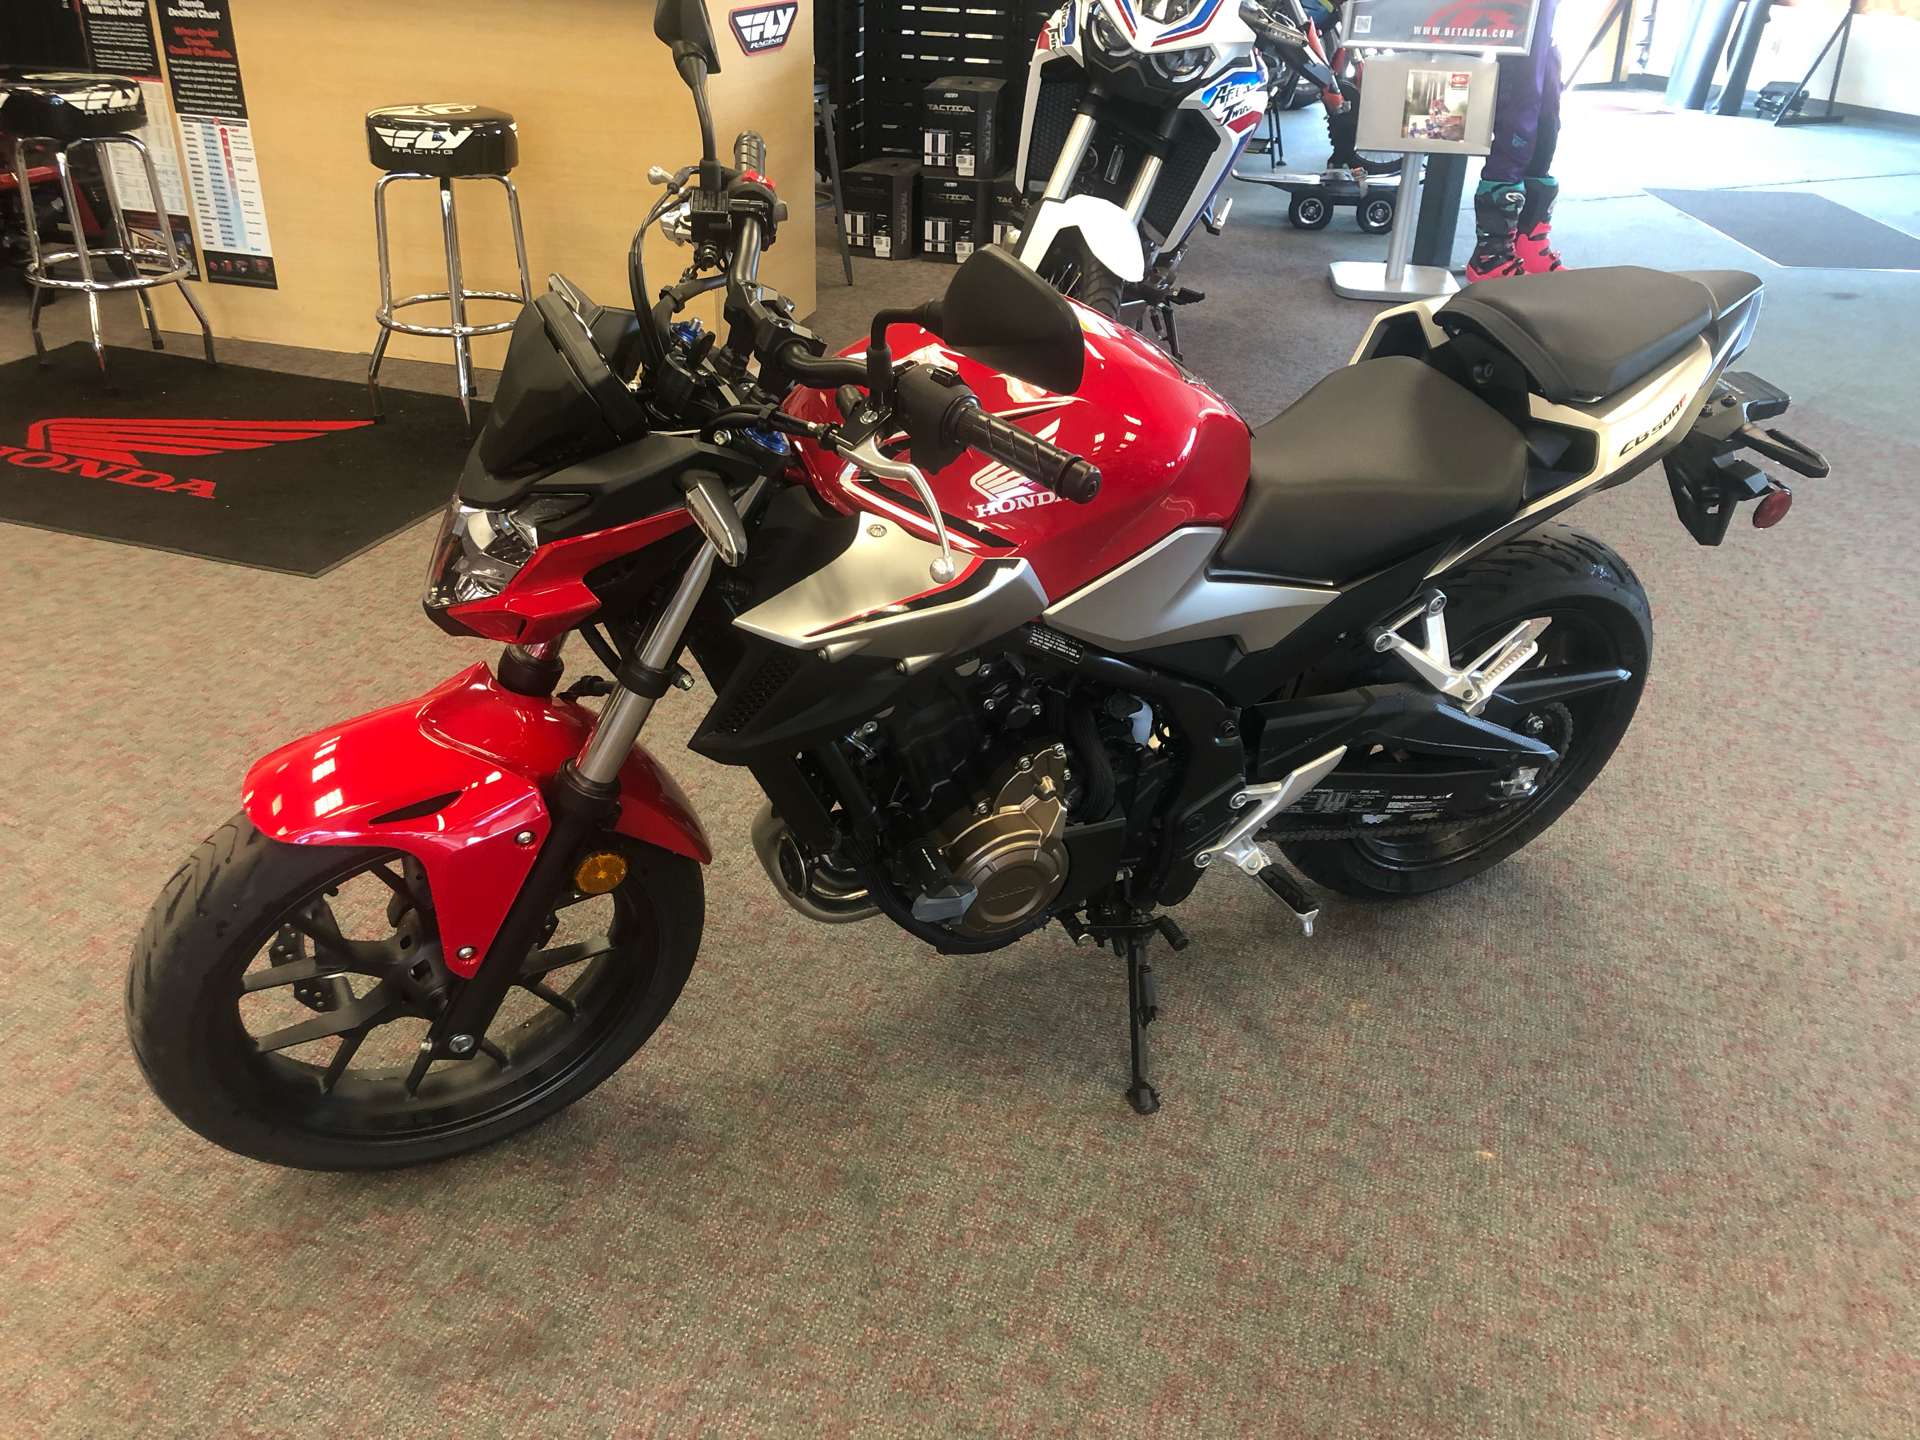 2019 Honda CB500F in Escanaba, Michigan - Photo 2